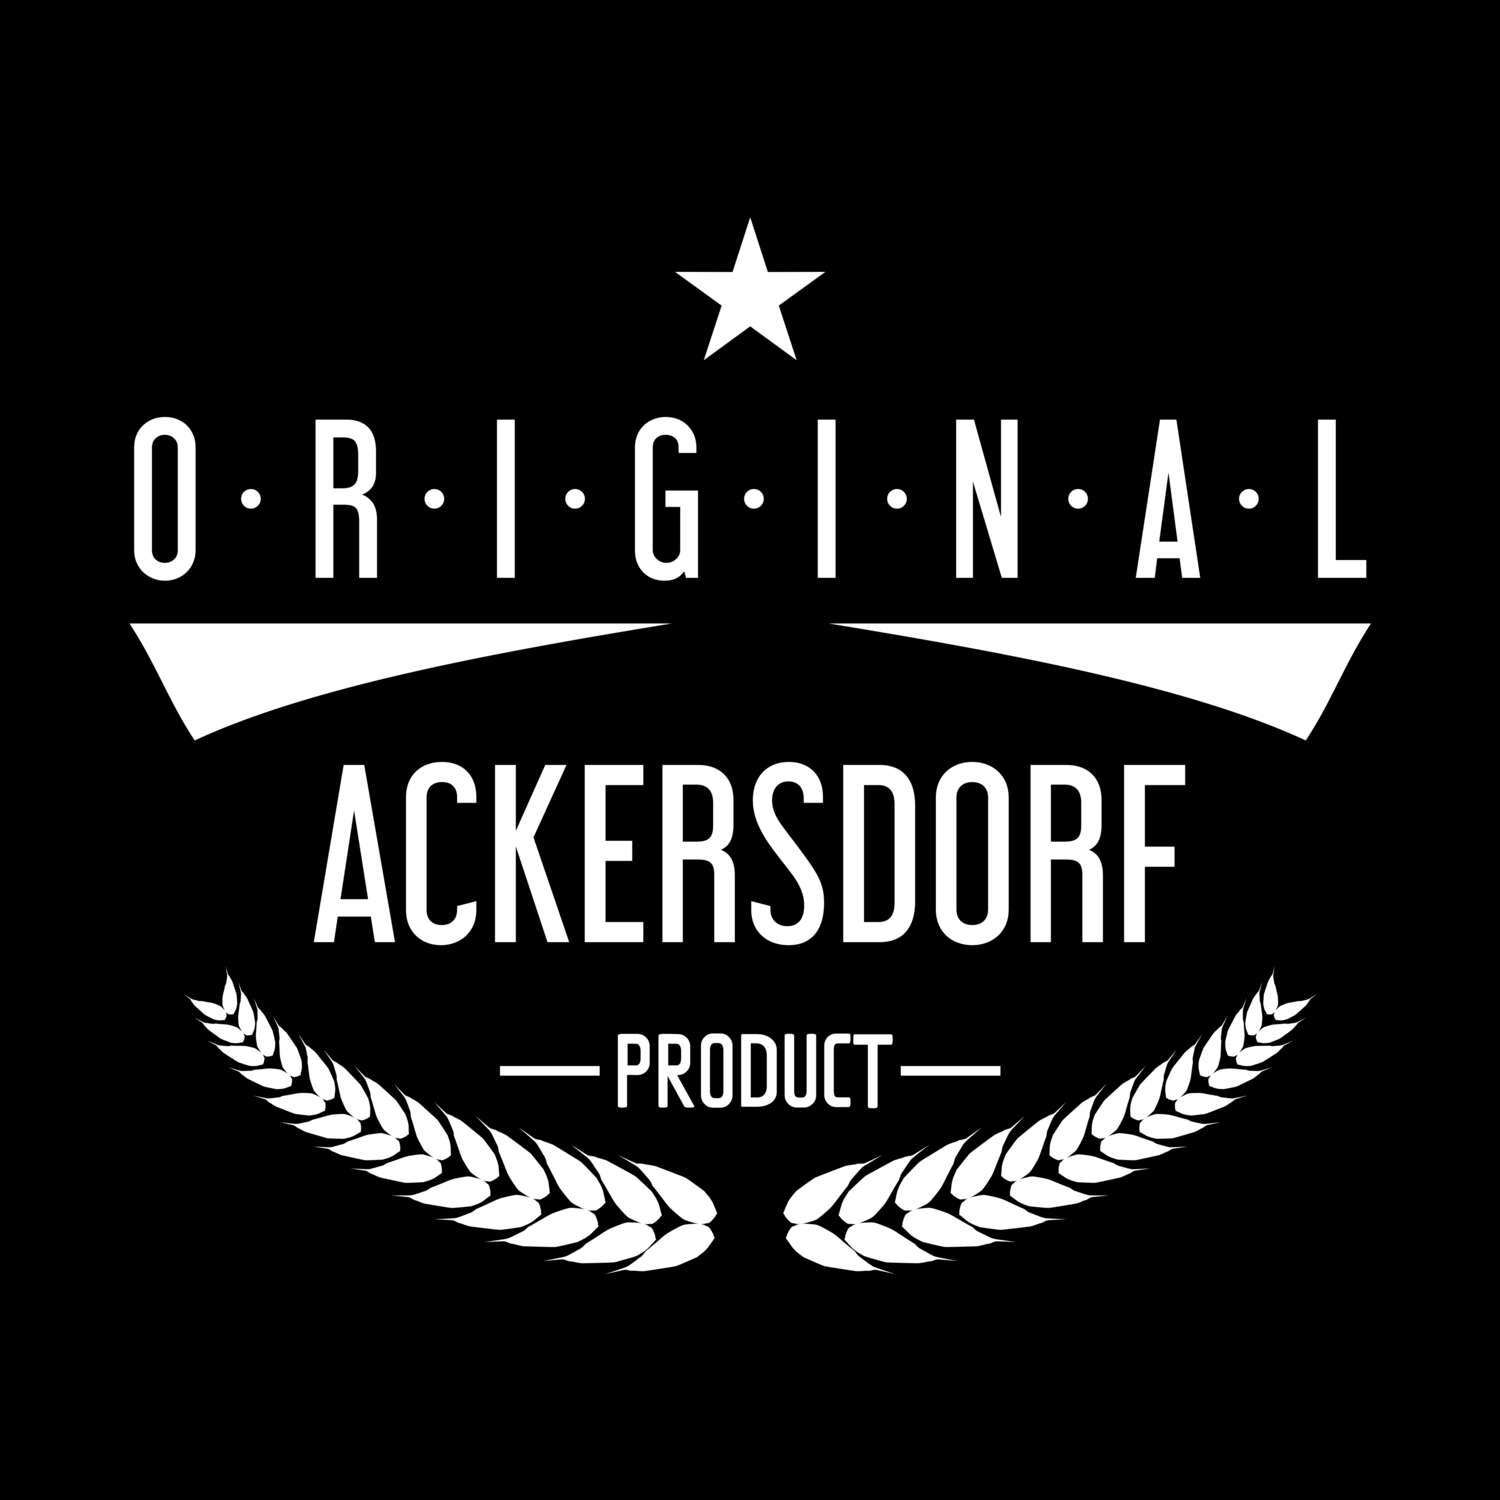 Ackersdorf T-Shirt »Original Product«